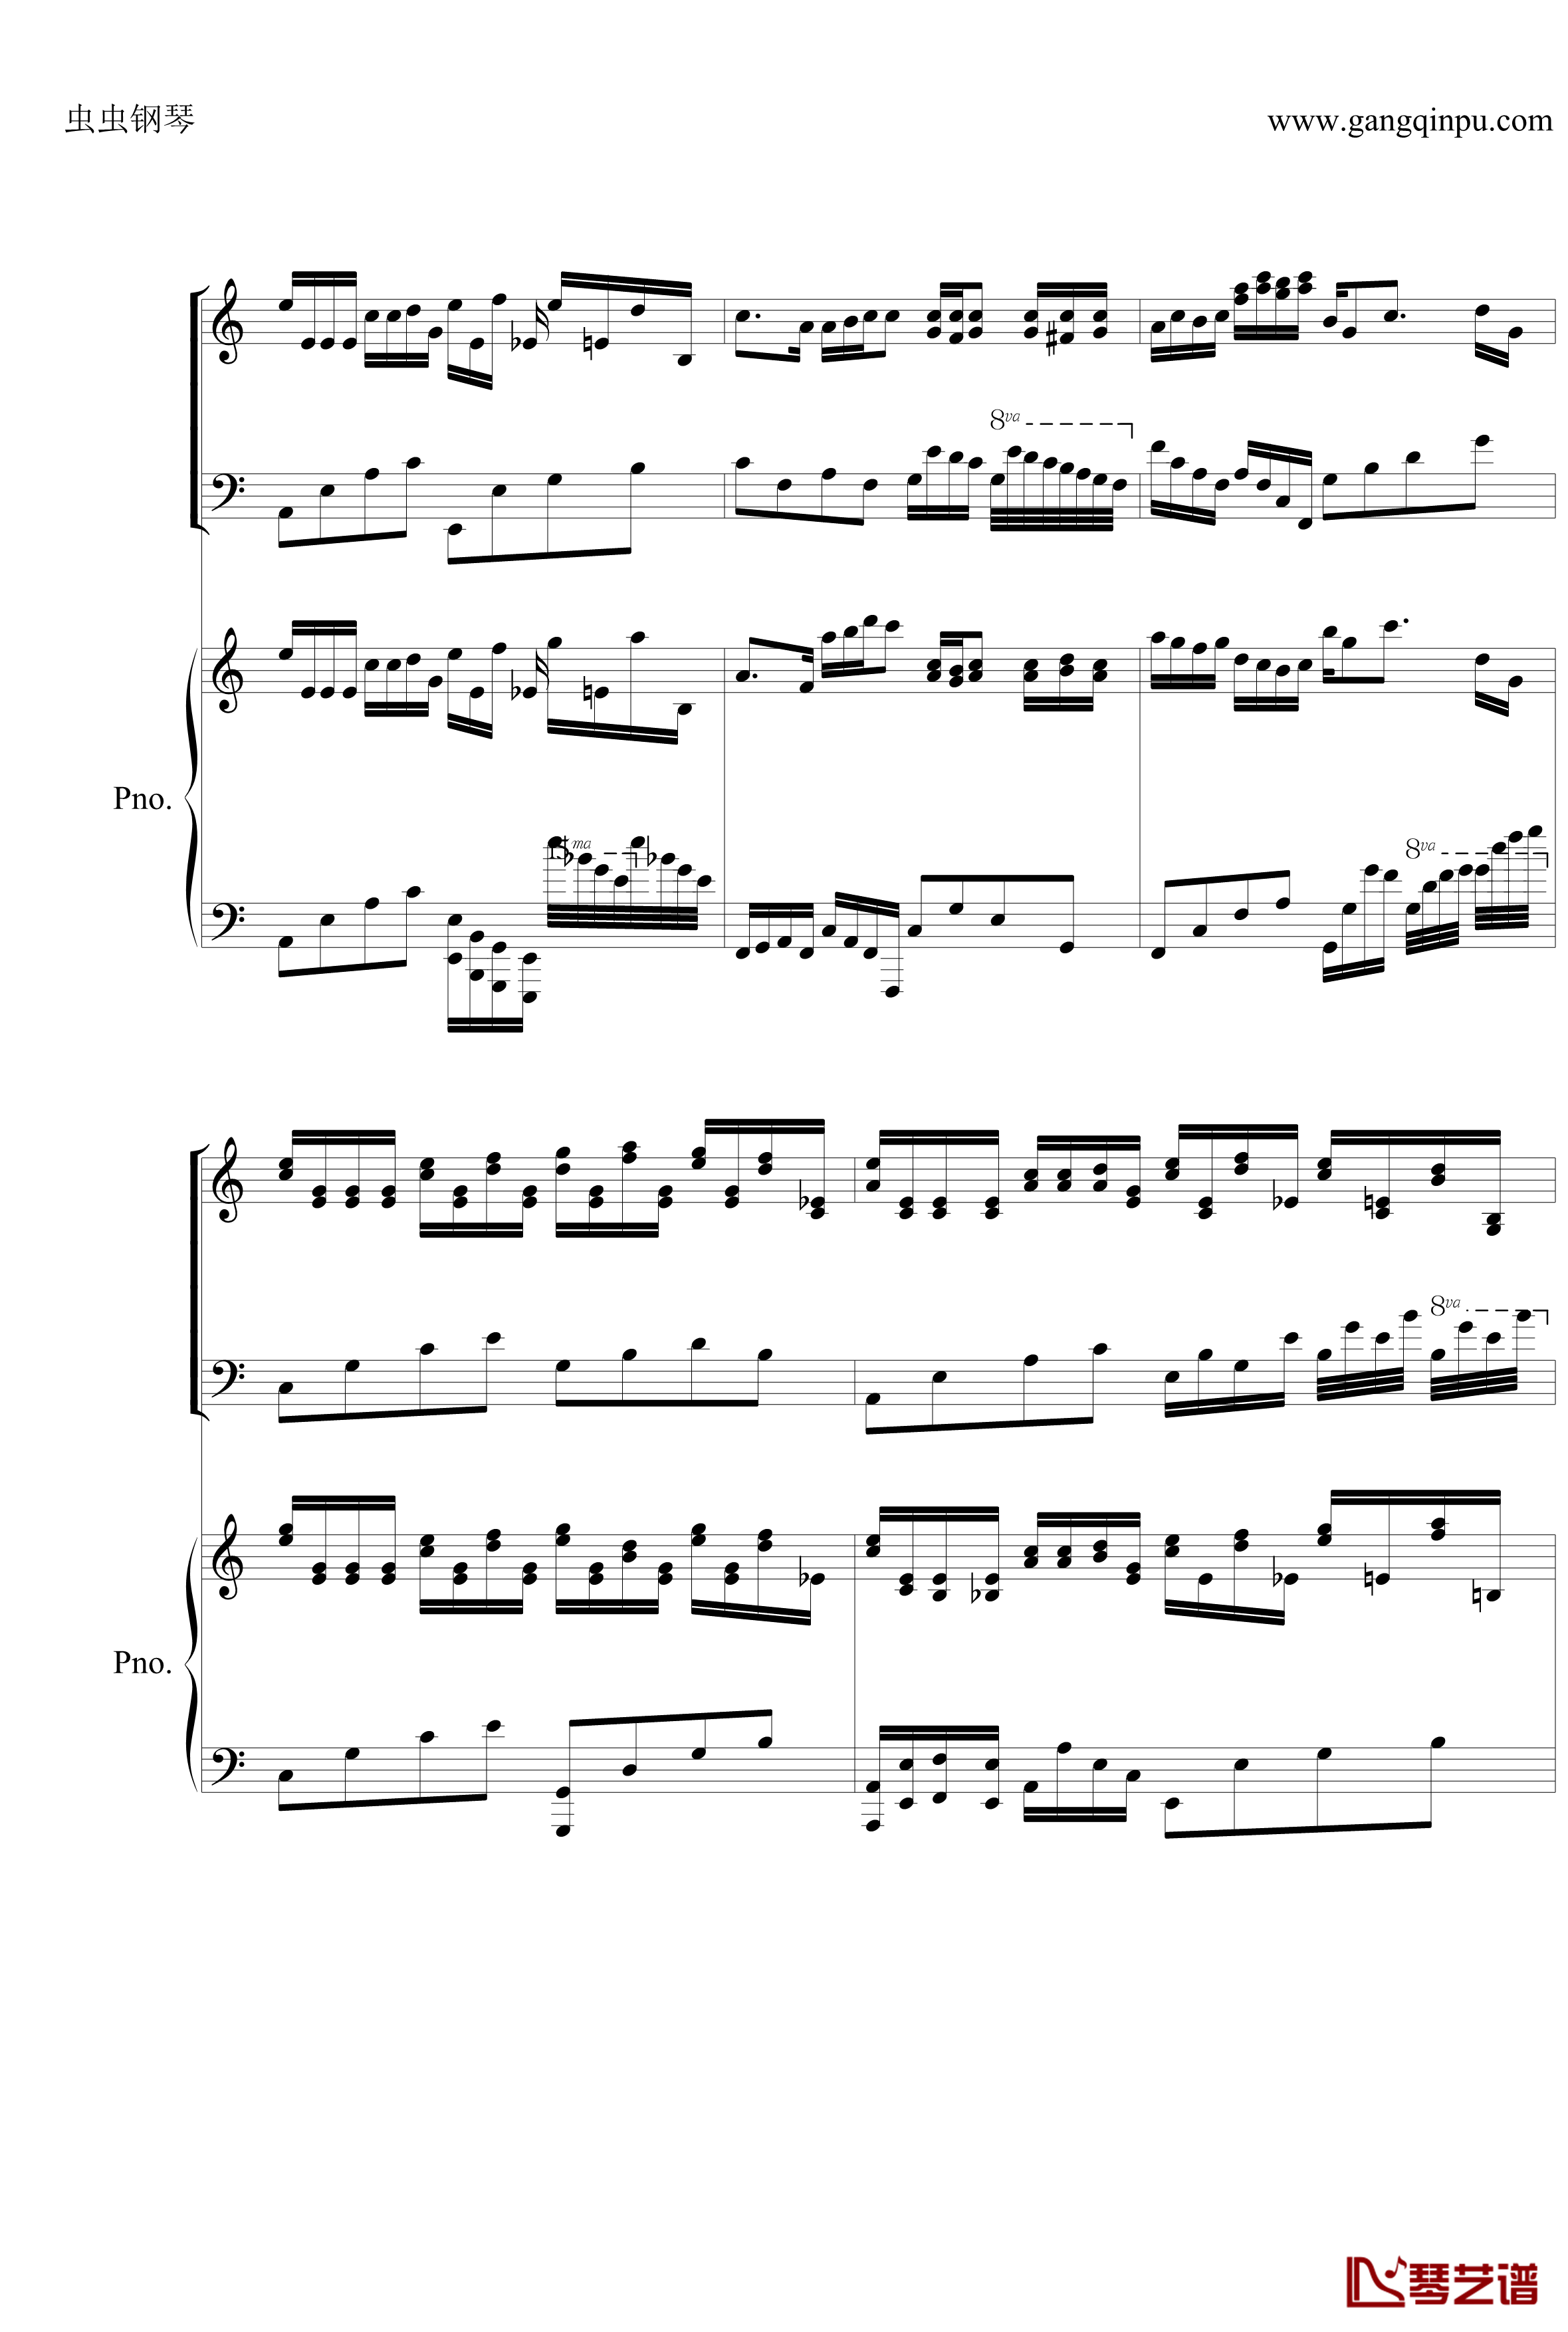 Canon双钢琴钢琴谱-仅供消遣-帕赫贝尔-Pachelbel9